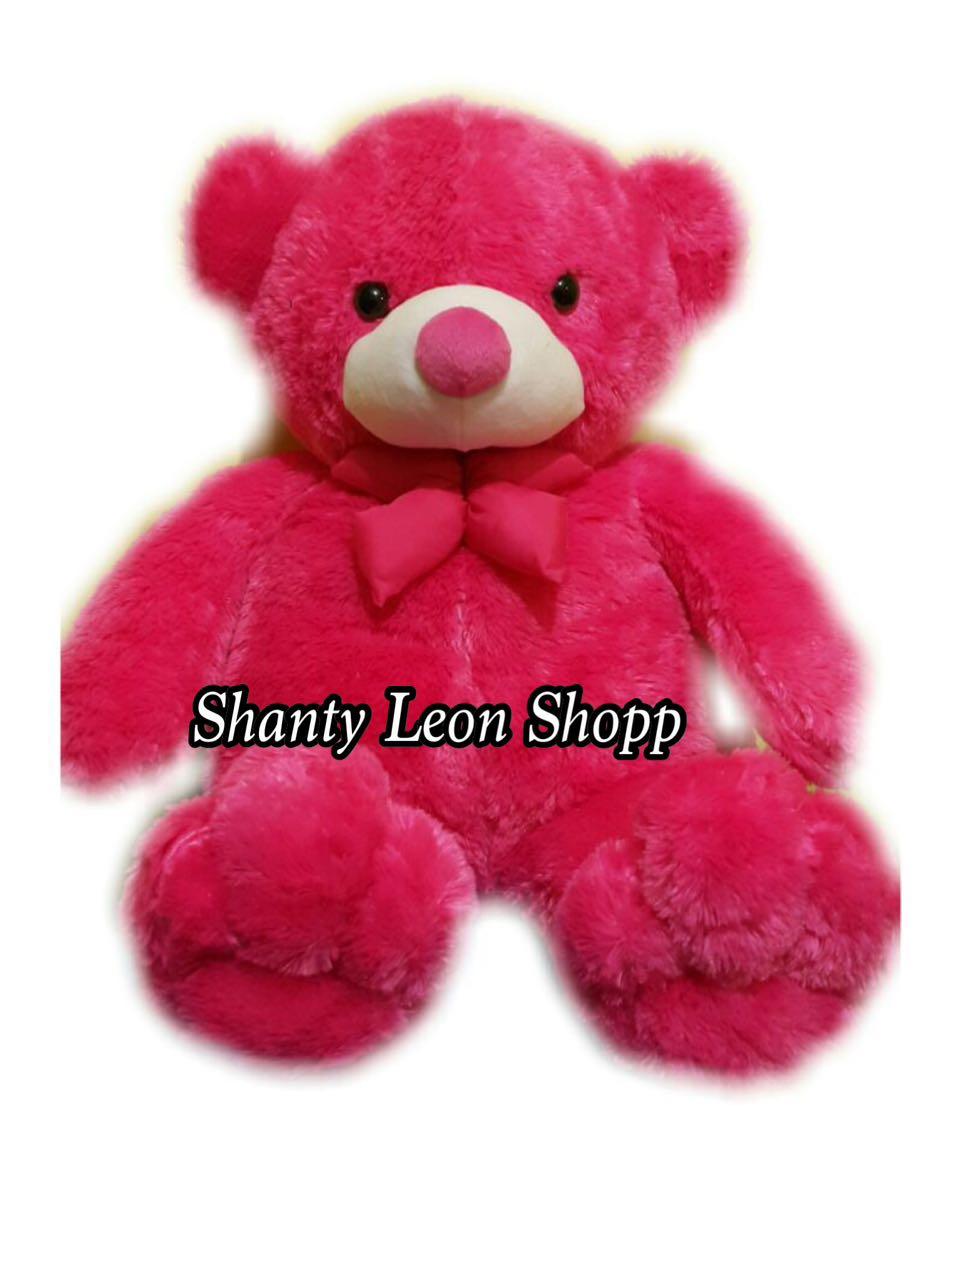 Putri nassa shopp Boneka Teddy Bear Besar Ukuran 1 M